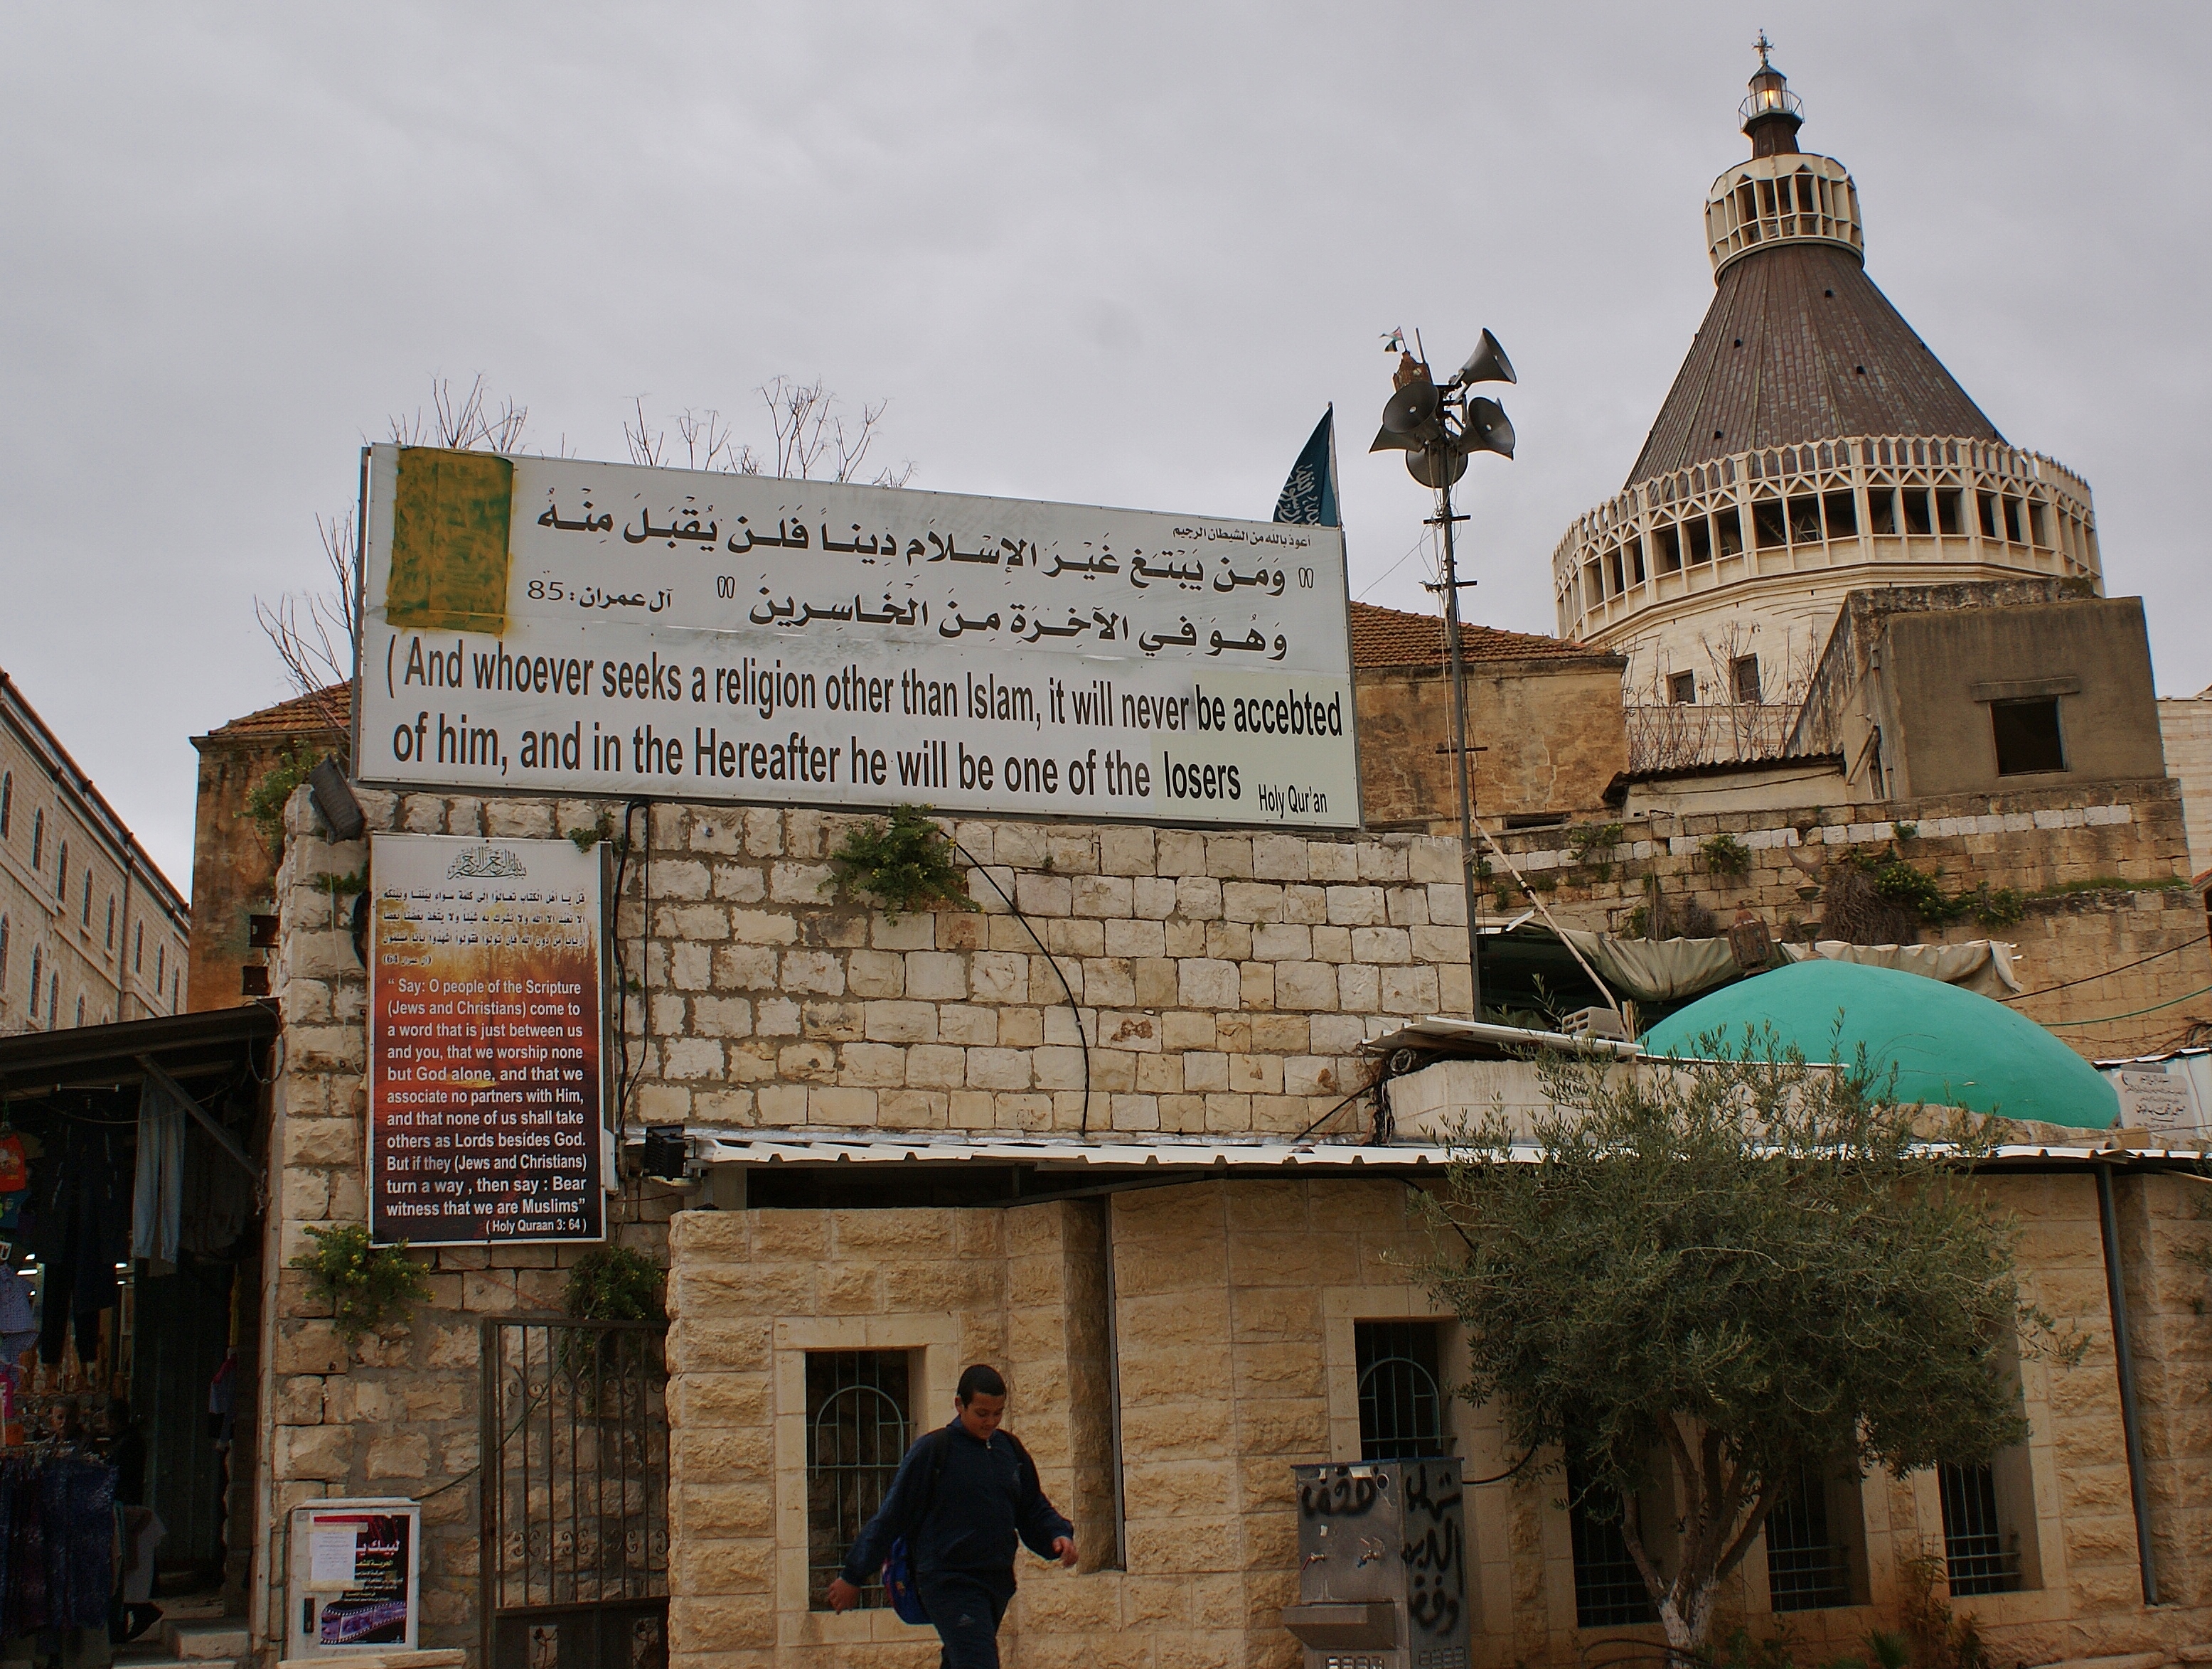 Basilica of the Annunciation, Nazareth, March 2012